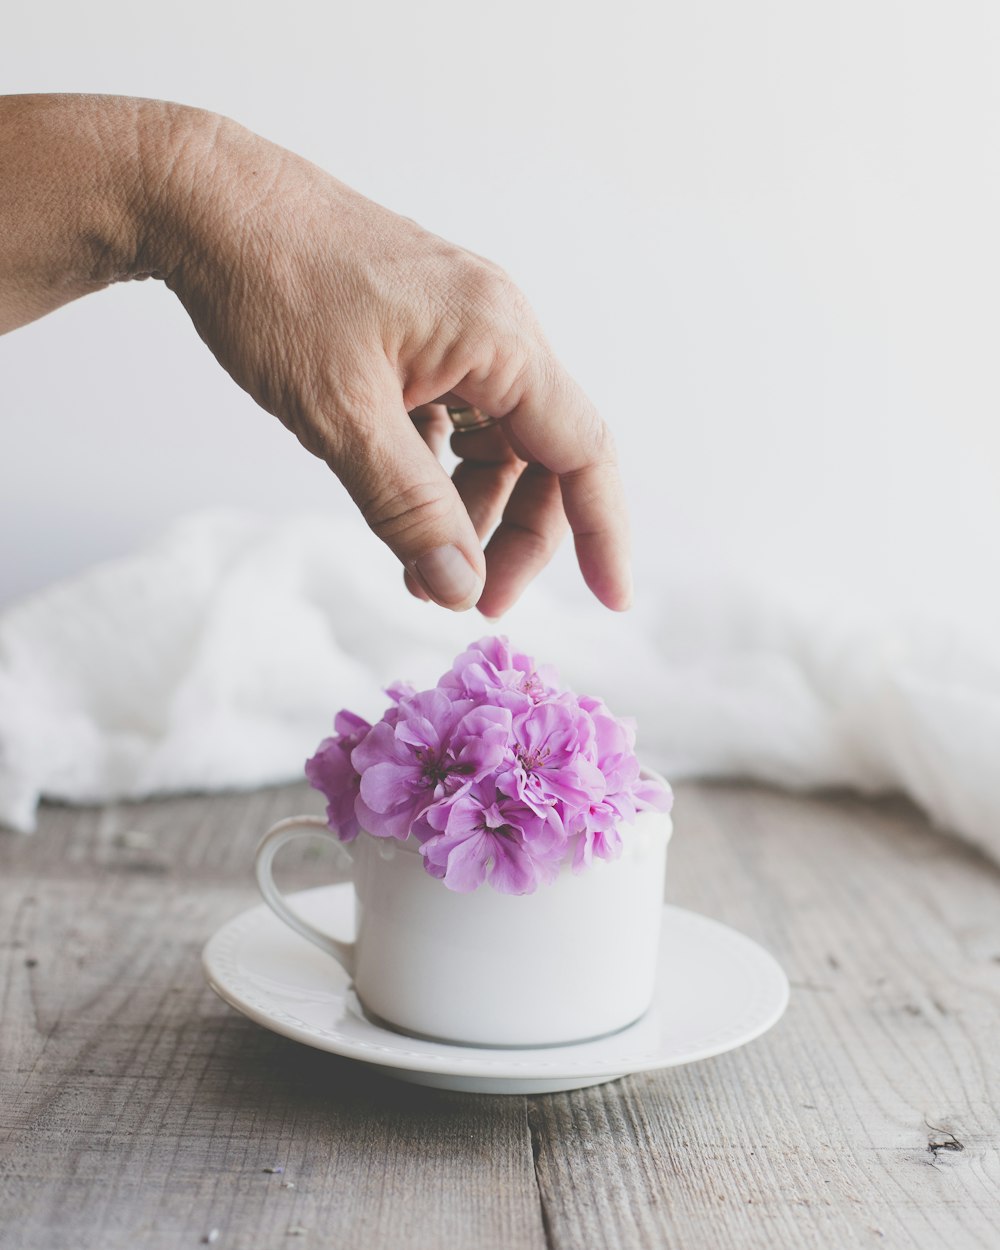 person holding white ceramic mug with purple flower